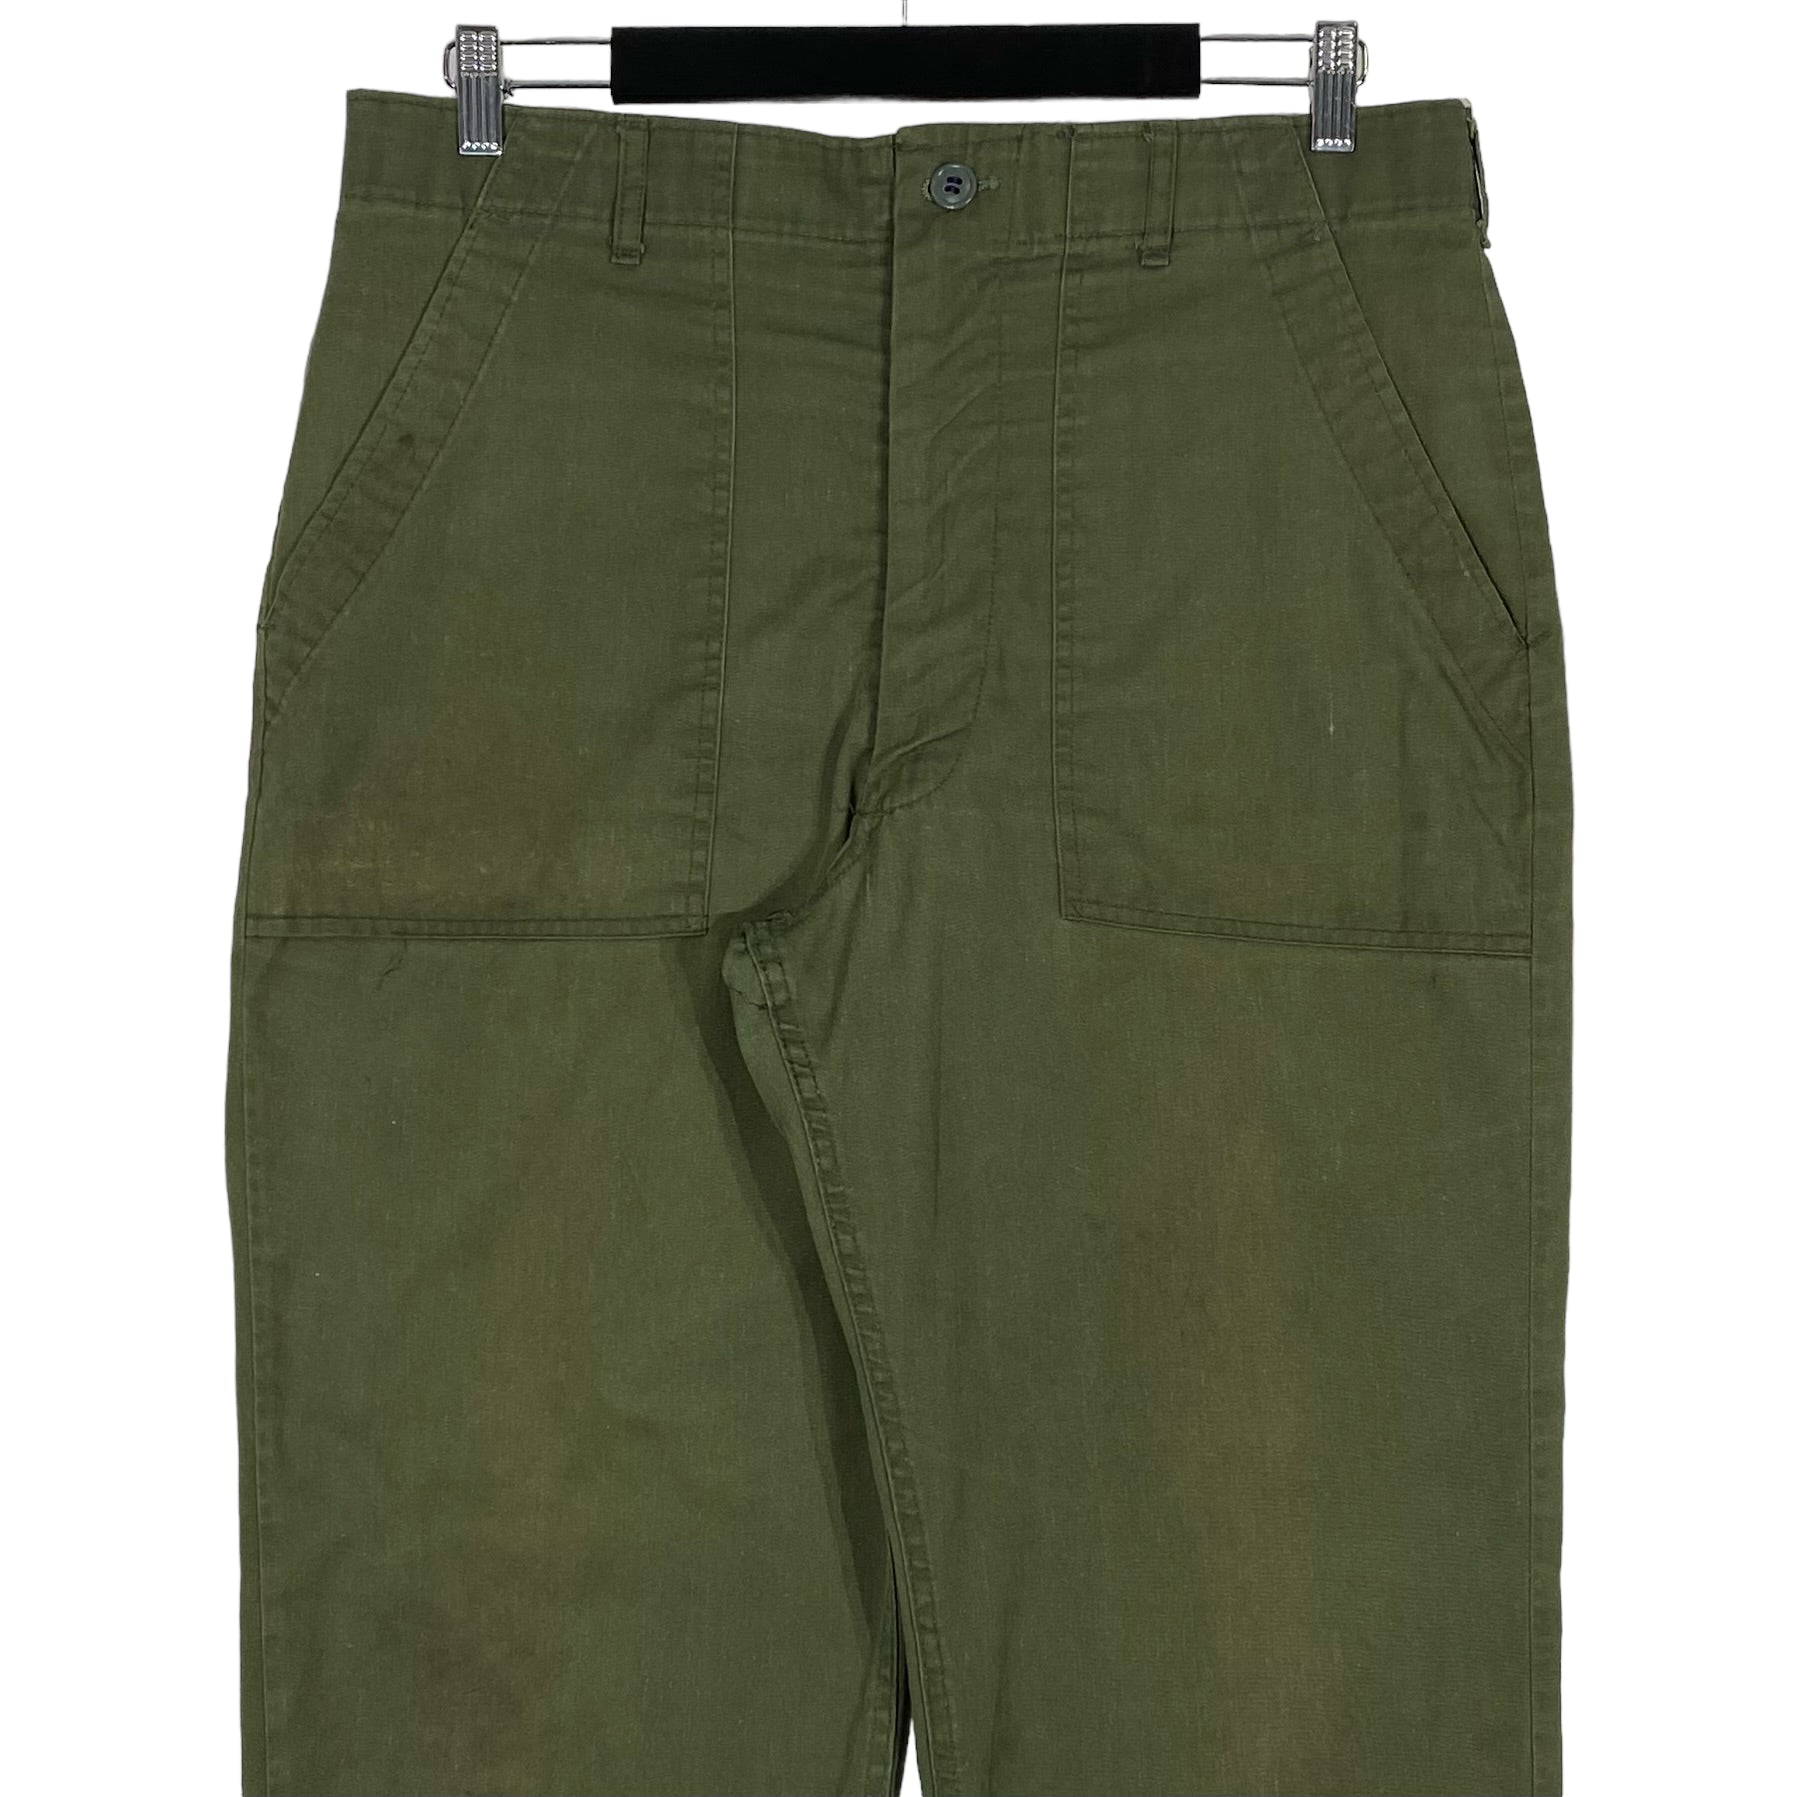 Vintage US Military Utility Pants